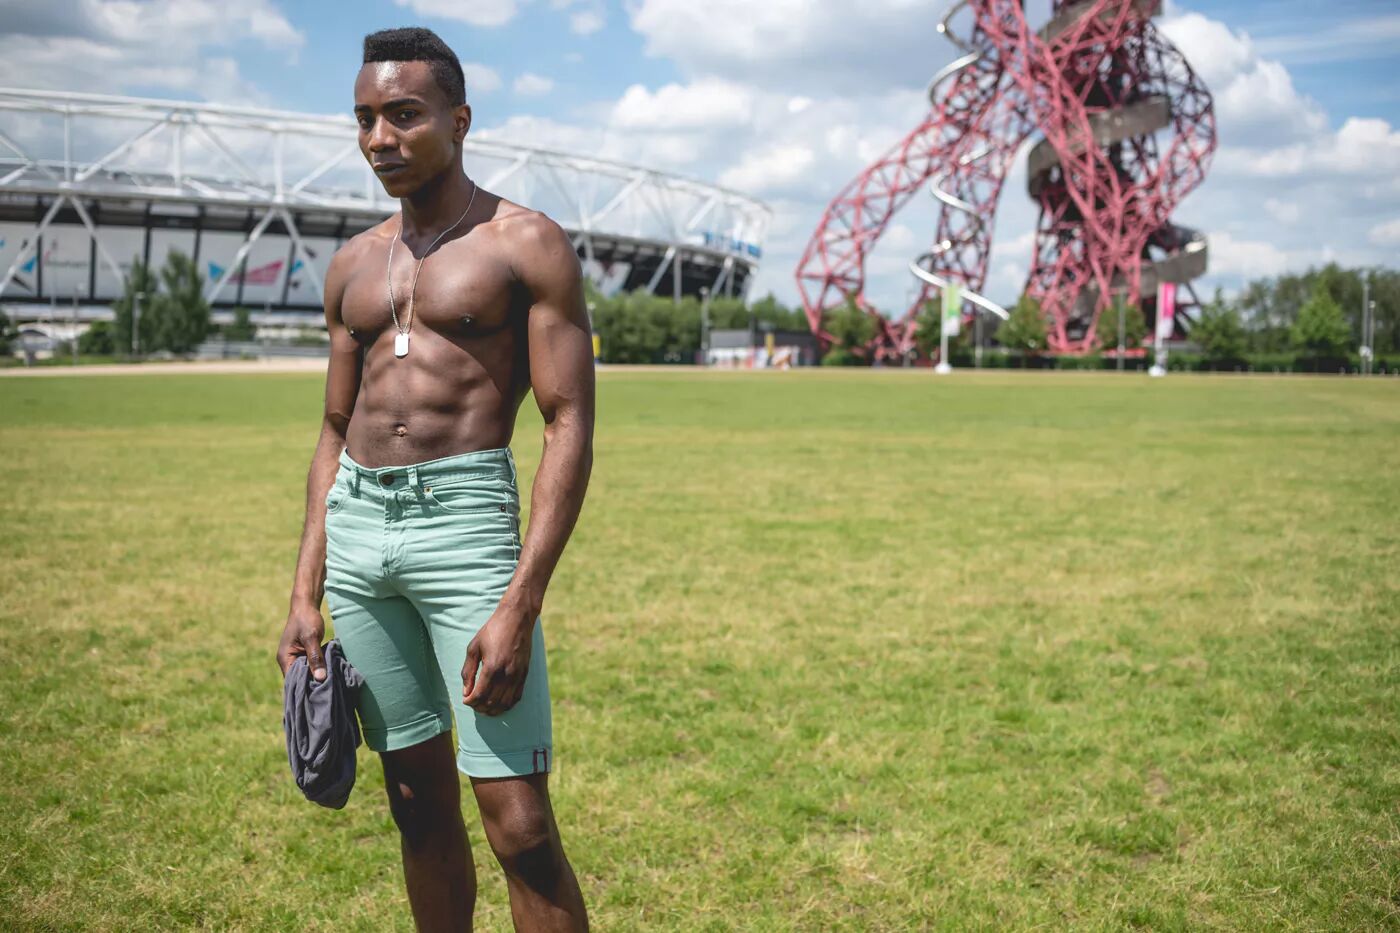 Man posing shirtless in front of Olympic Stadium in London.